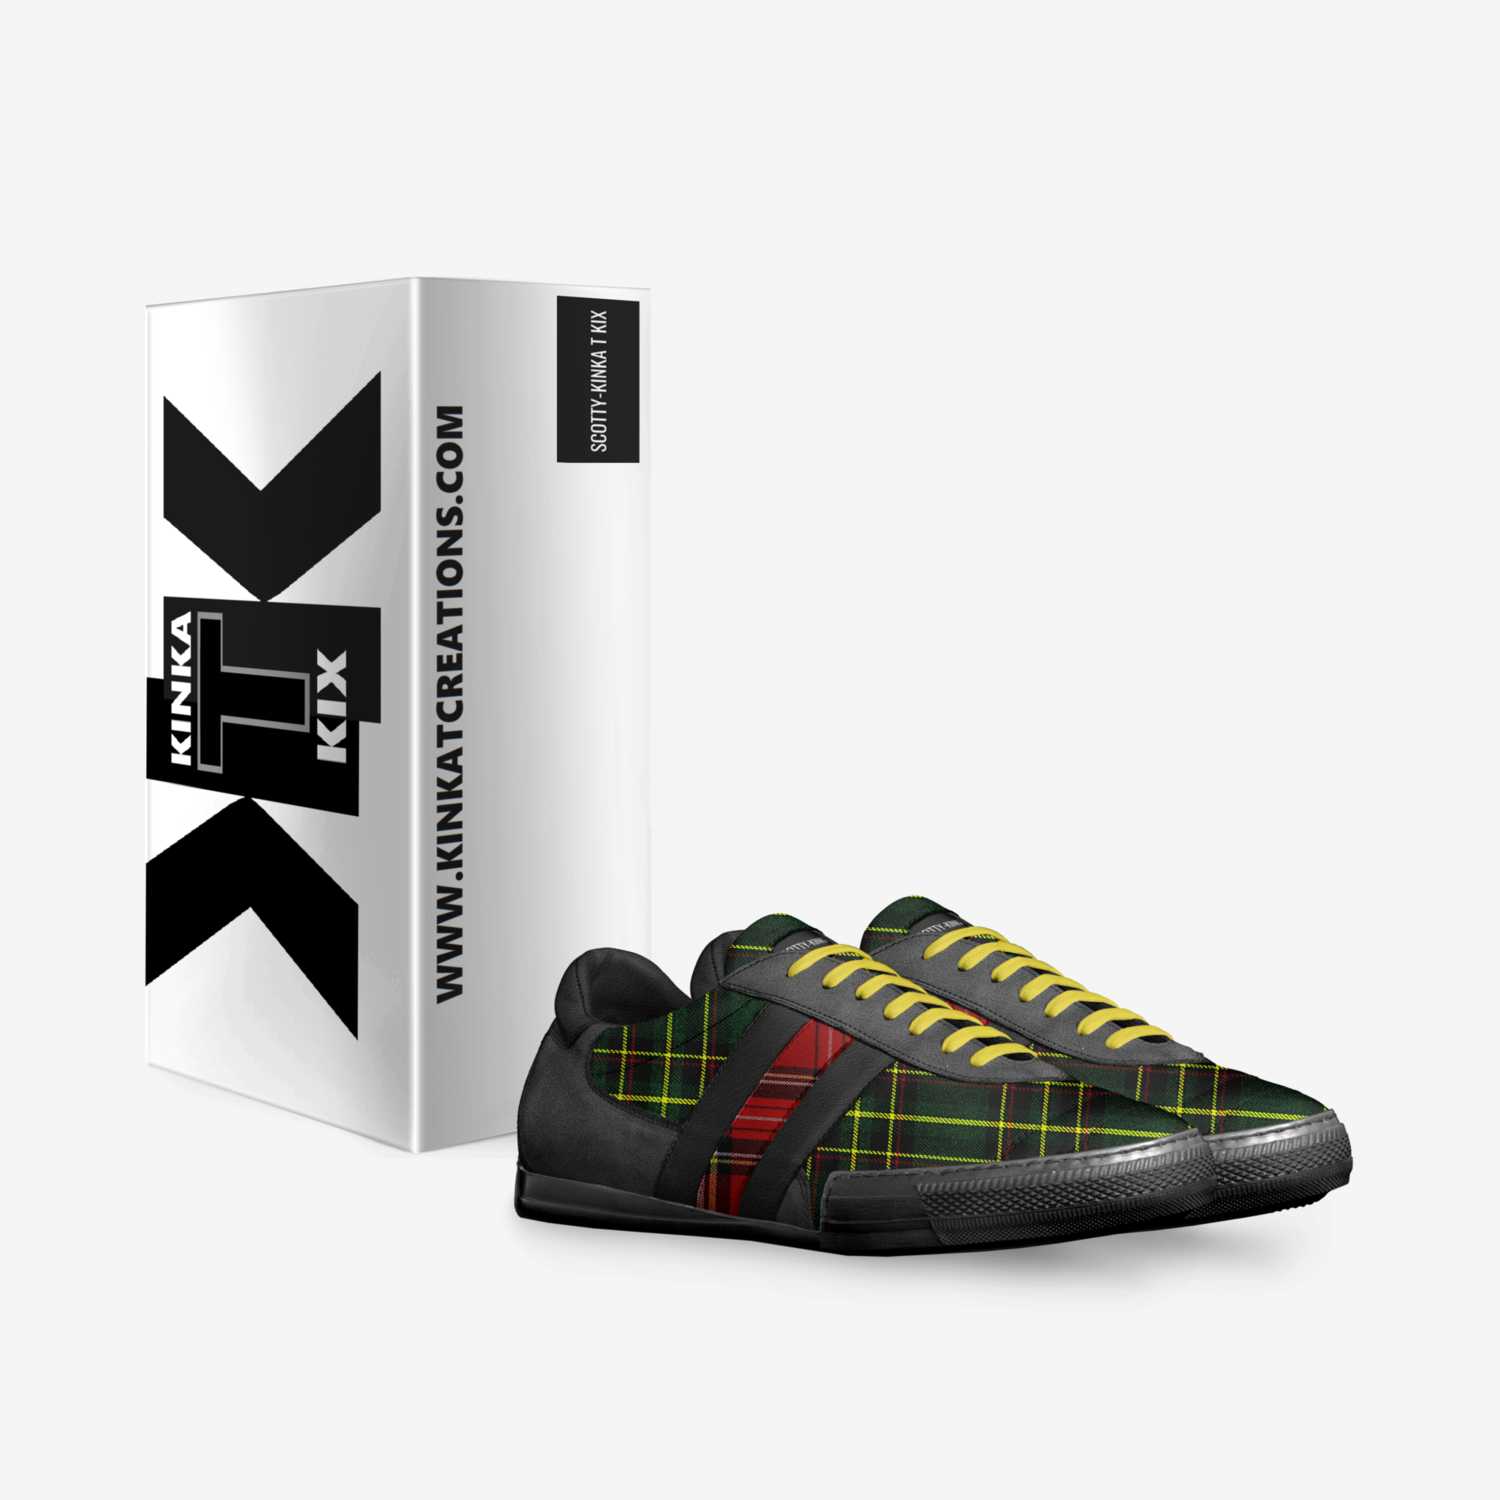 Scotty-KinkaTKix custom made in Italy shoes by Kinka T Kix | Box view